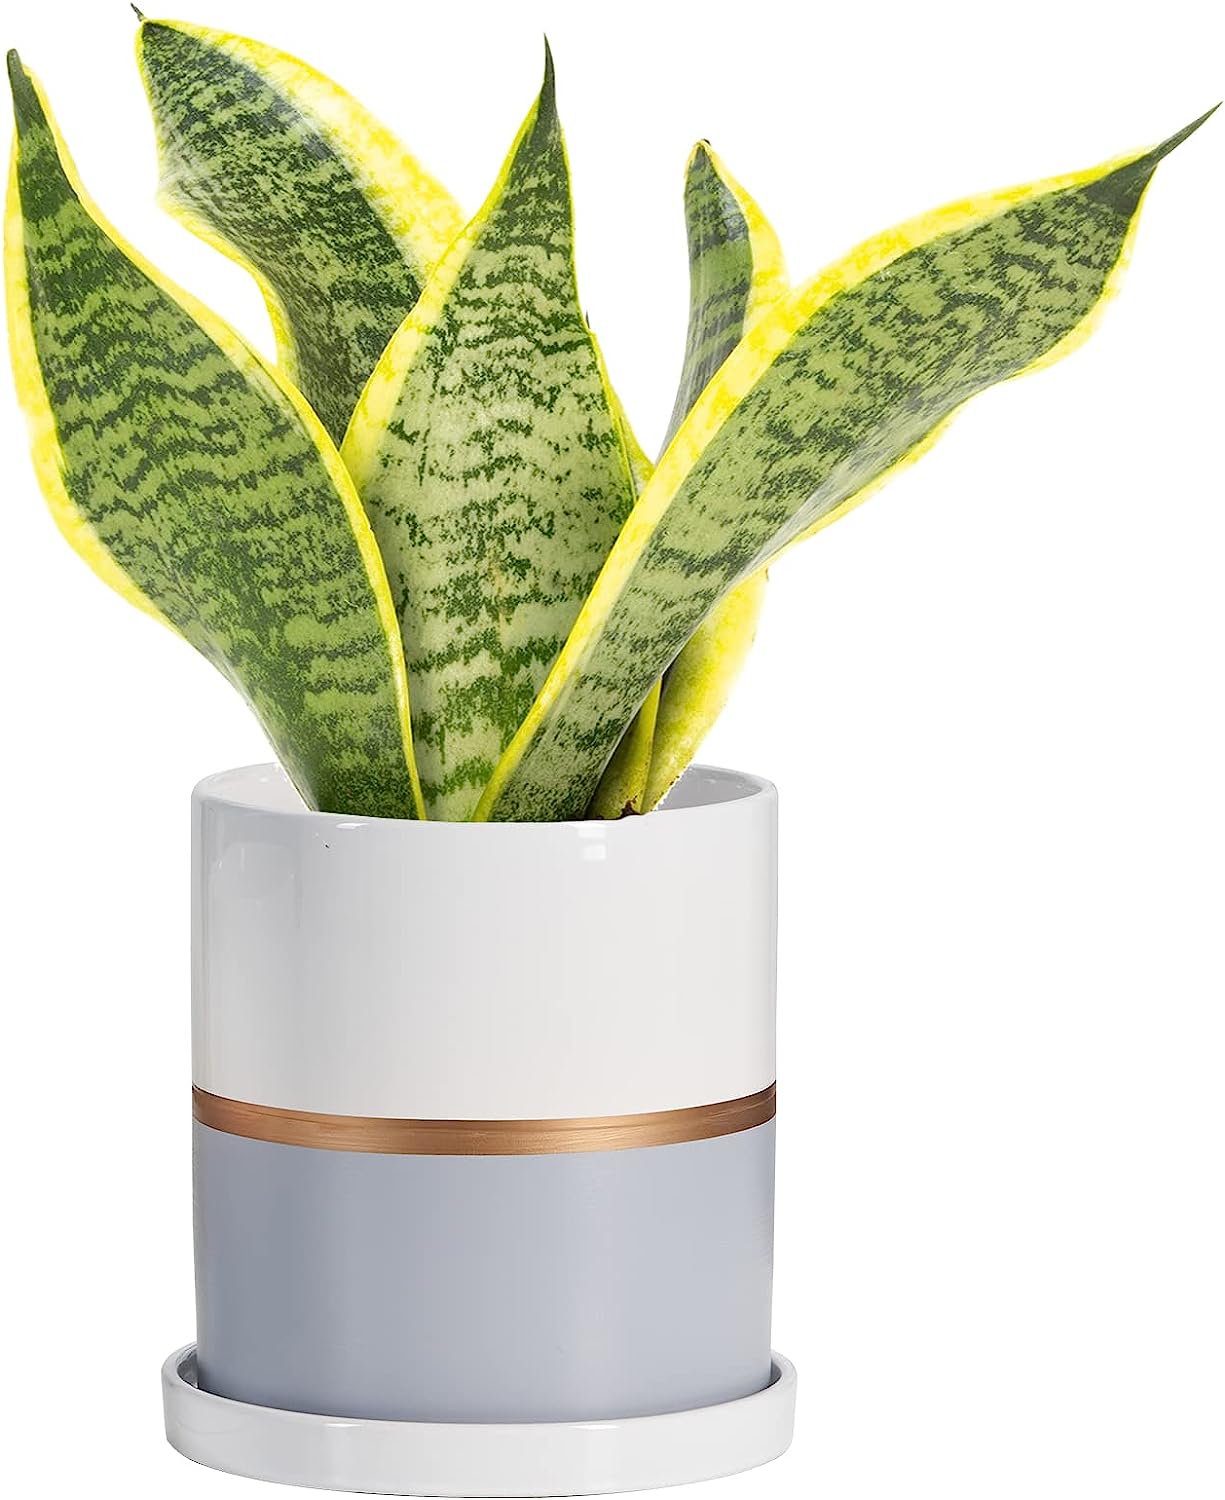 Ekirlin 5 inch Plant Pot - Ceramic Flower Planters [...]